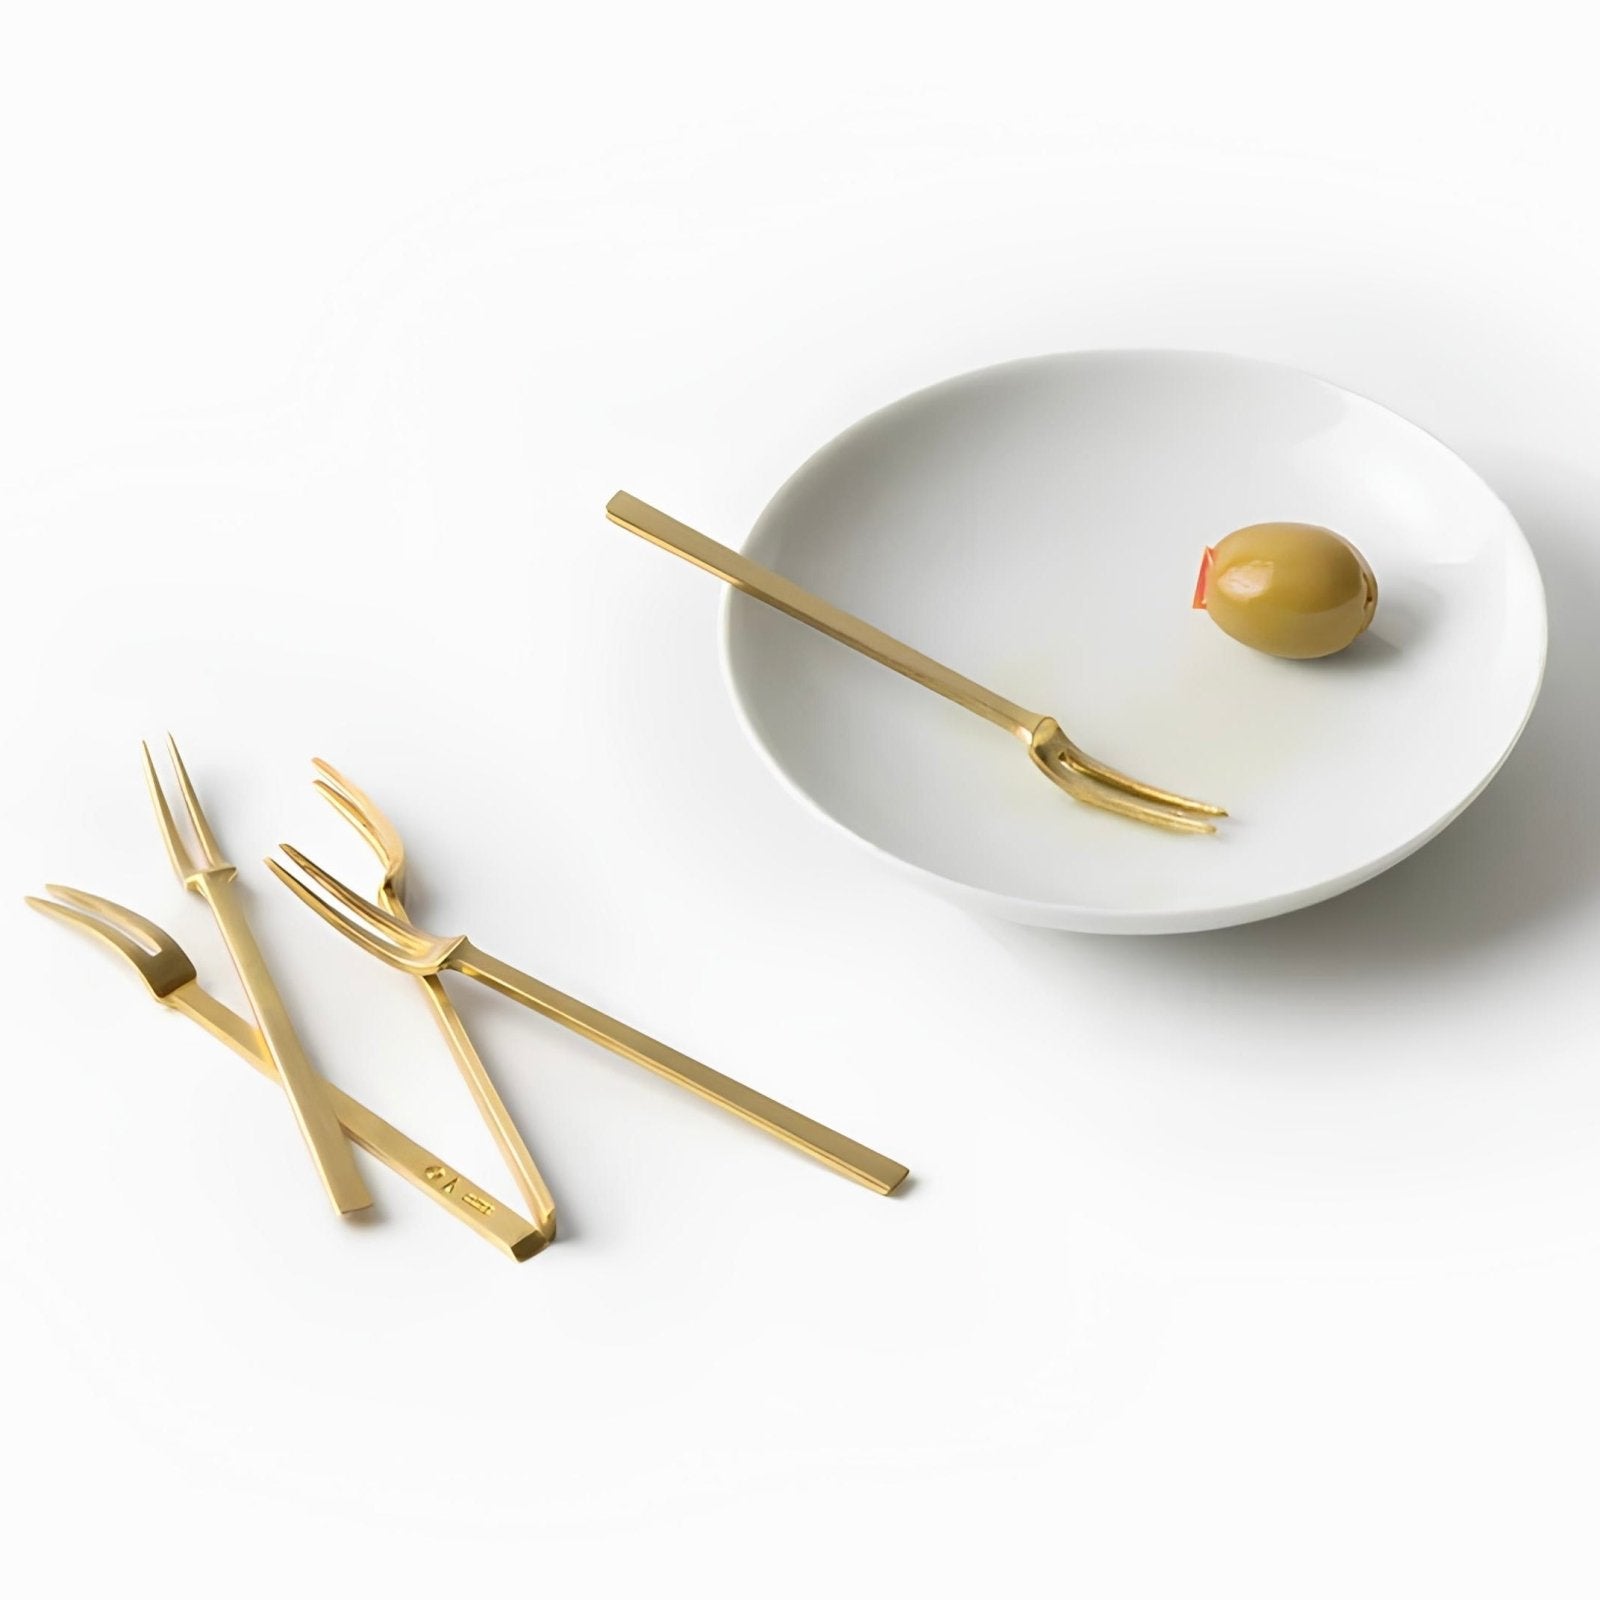 Sakami Kogei ‘Hime’ små japanske gafler i messing (5 styk)_10 by Rune-Jakobsen Design